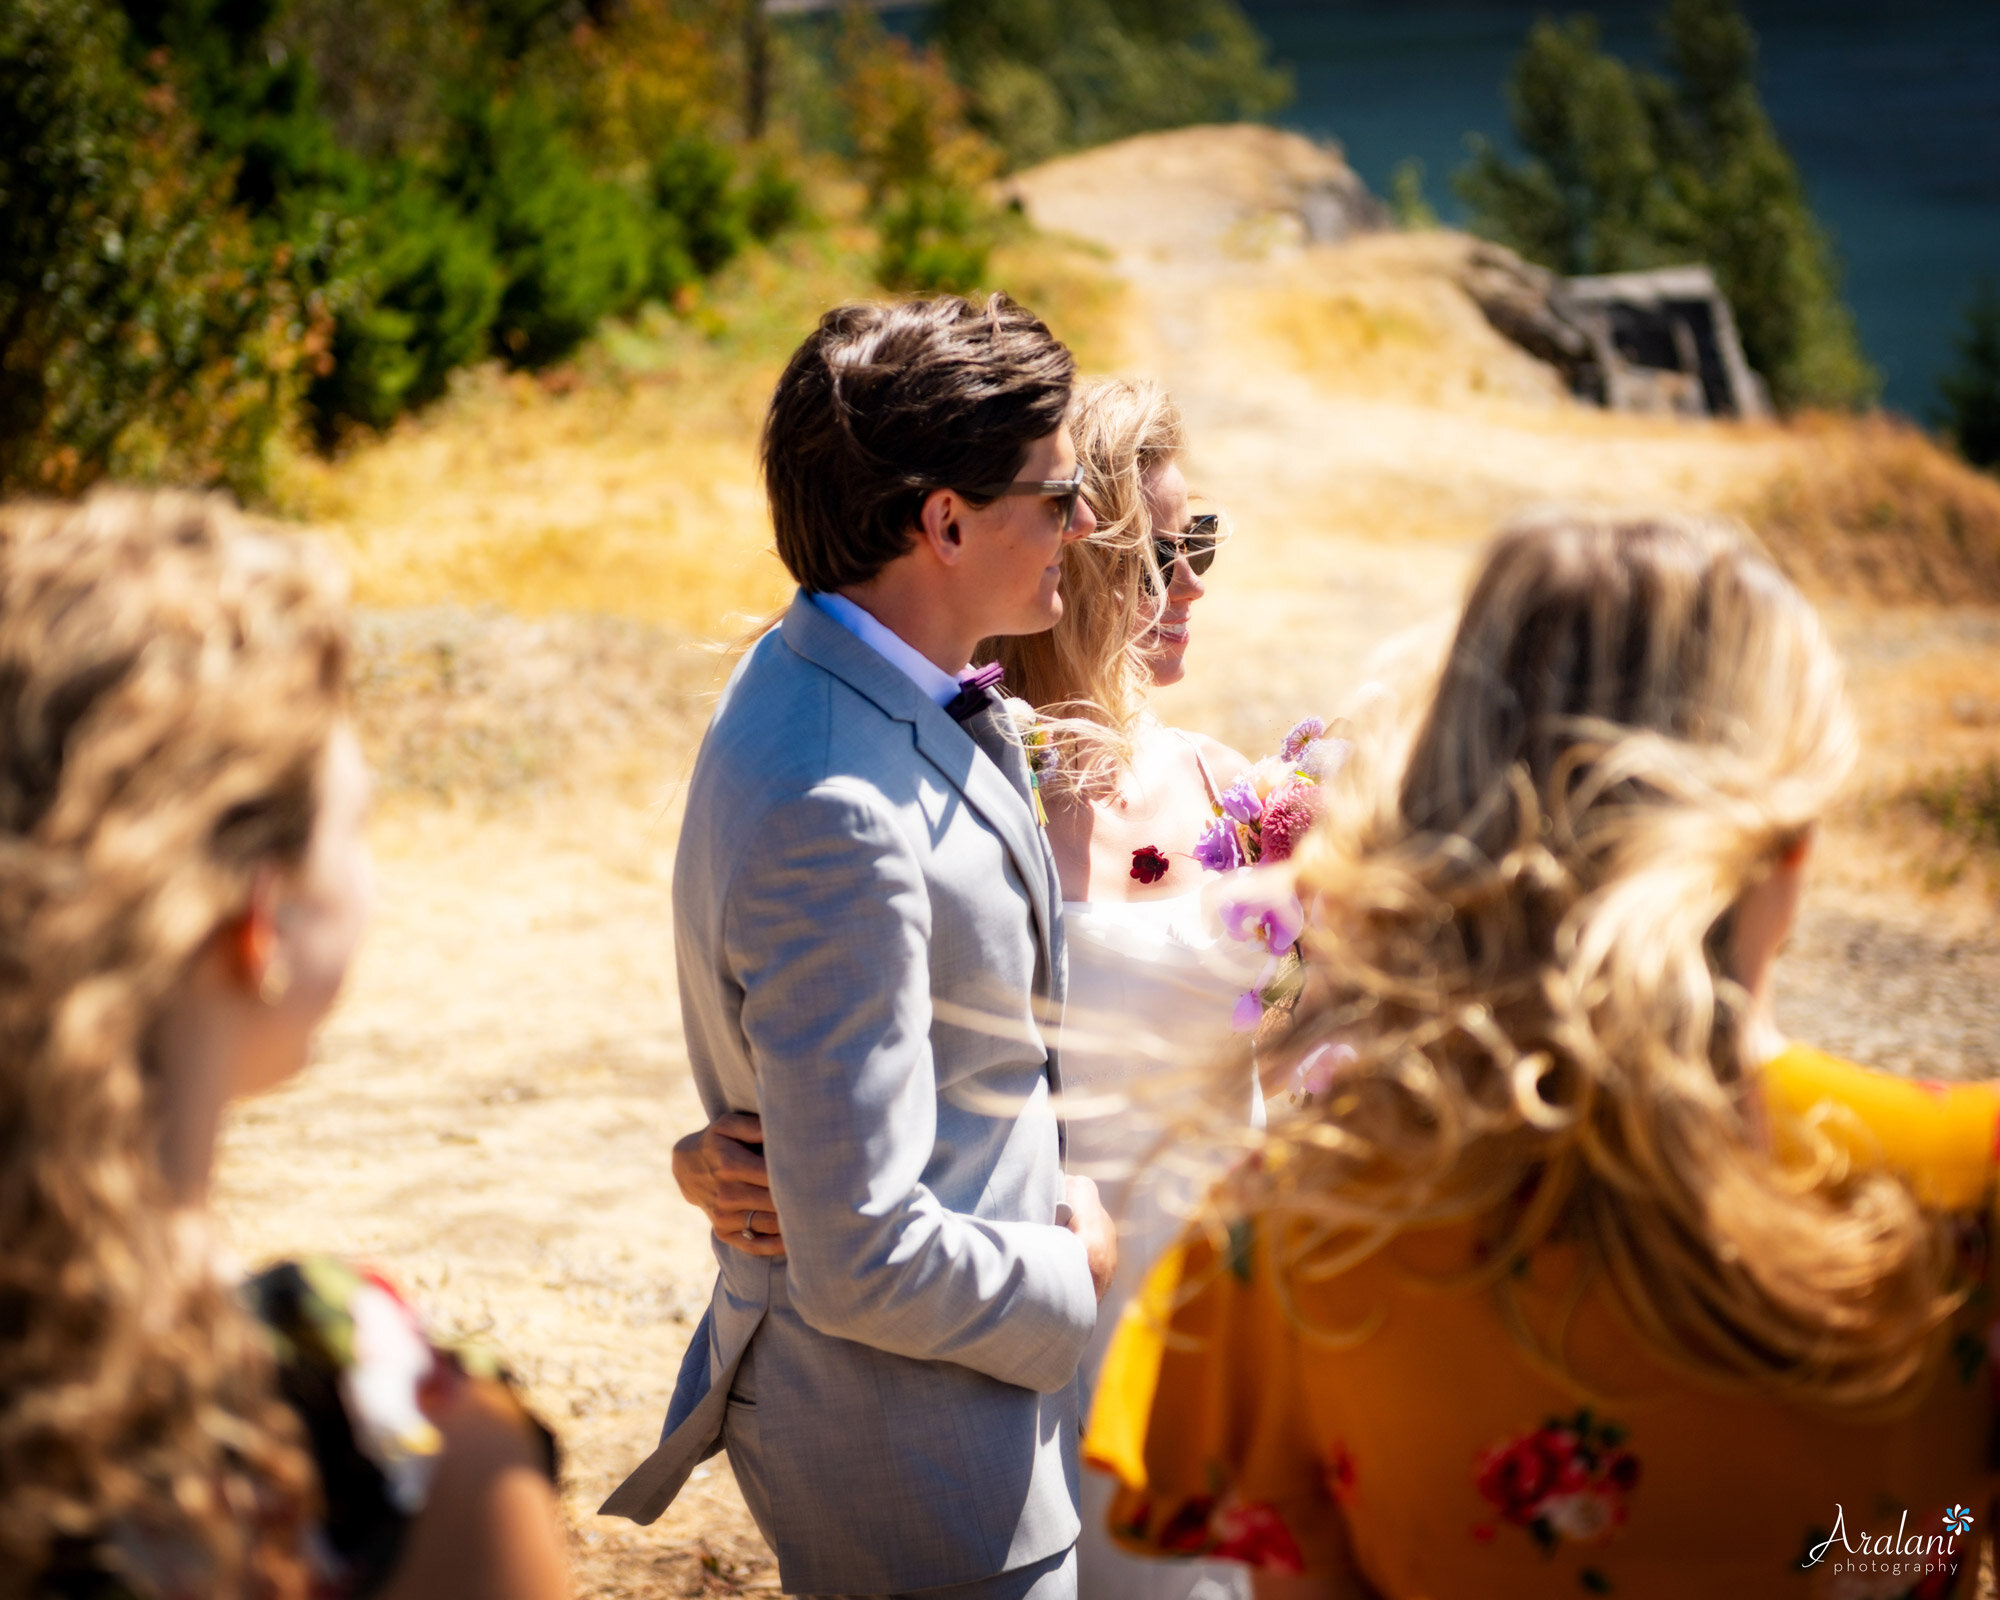 Courtney-Jimmy-004-Columbia-River-Gorge-Government-Cove-Latourell-Falls-Oregon-Wedding-Elopement-Photographer-Aralani-Photography-Courtney_Jimmy_W0035.jpg